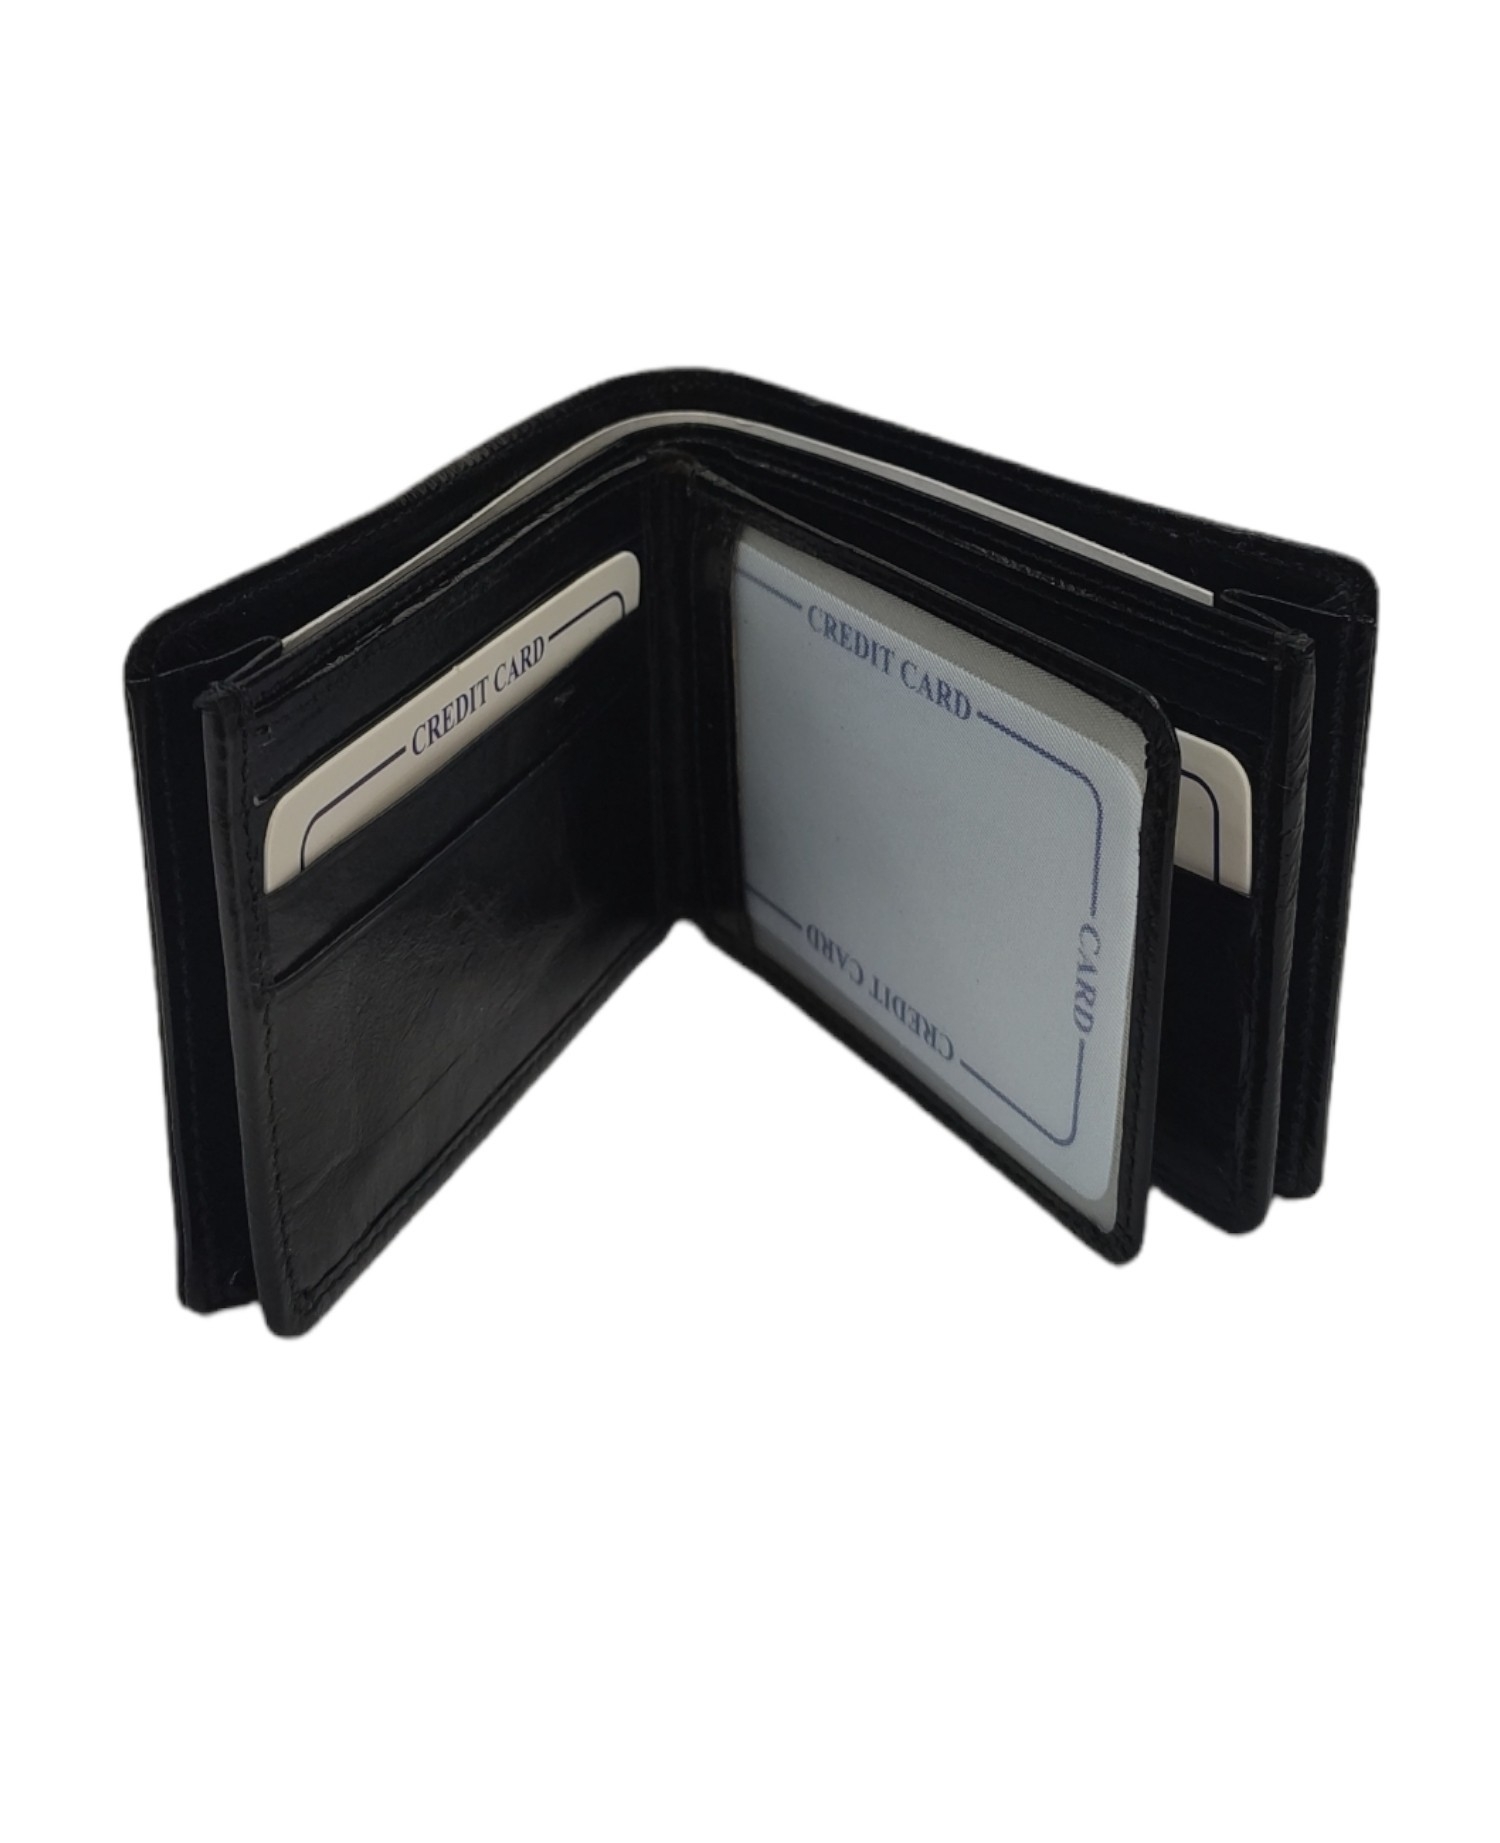 Itzy Mini Wallet™ Card Holder & Key Chain – Harper and Finn